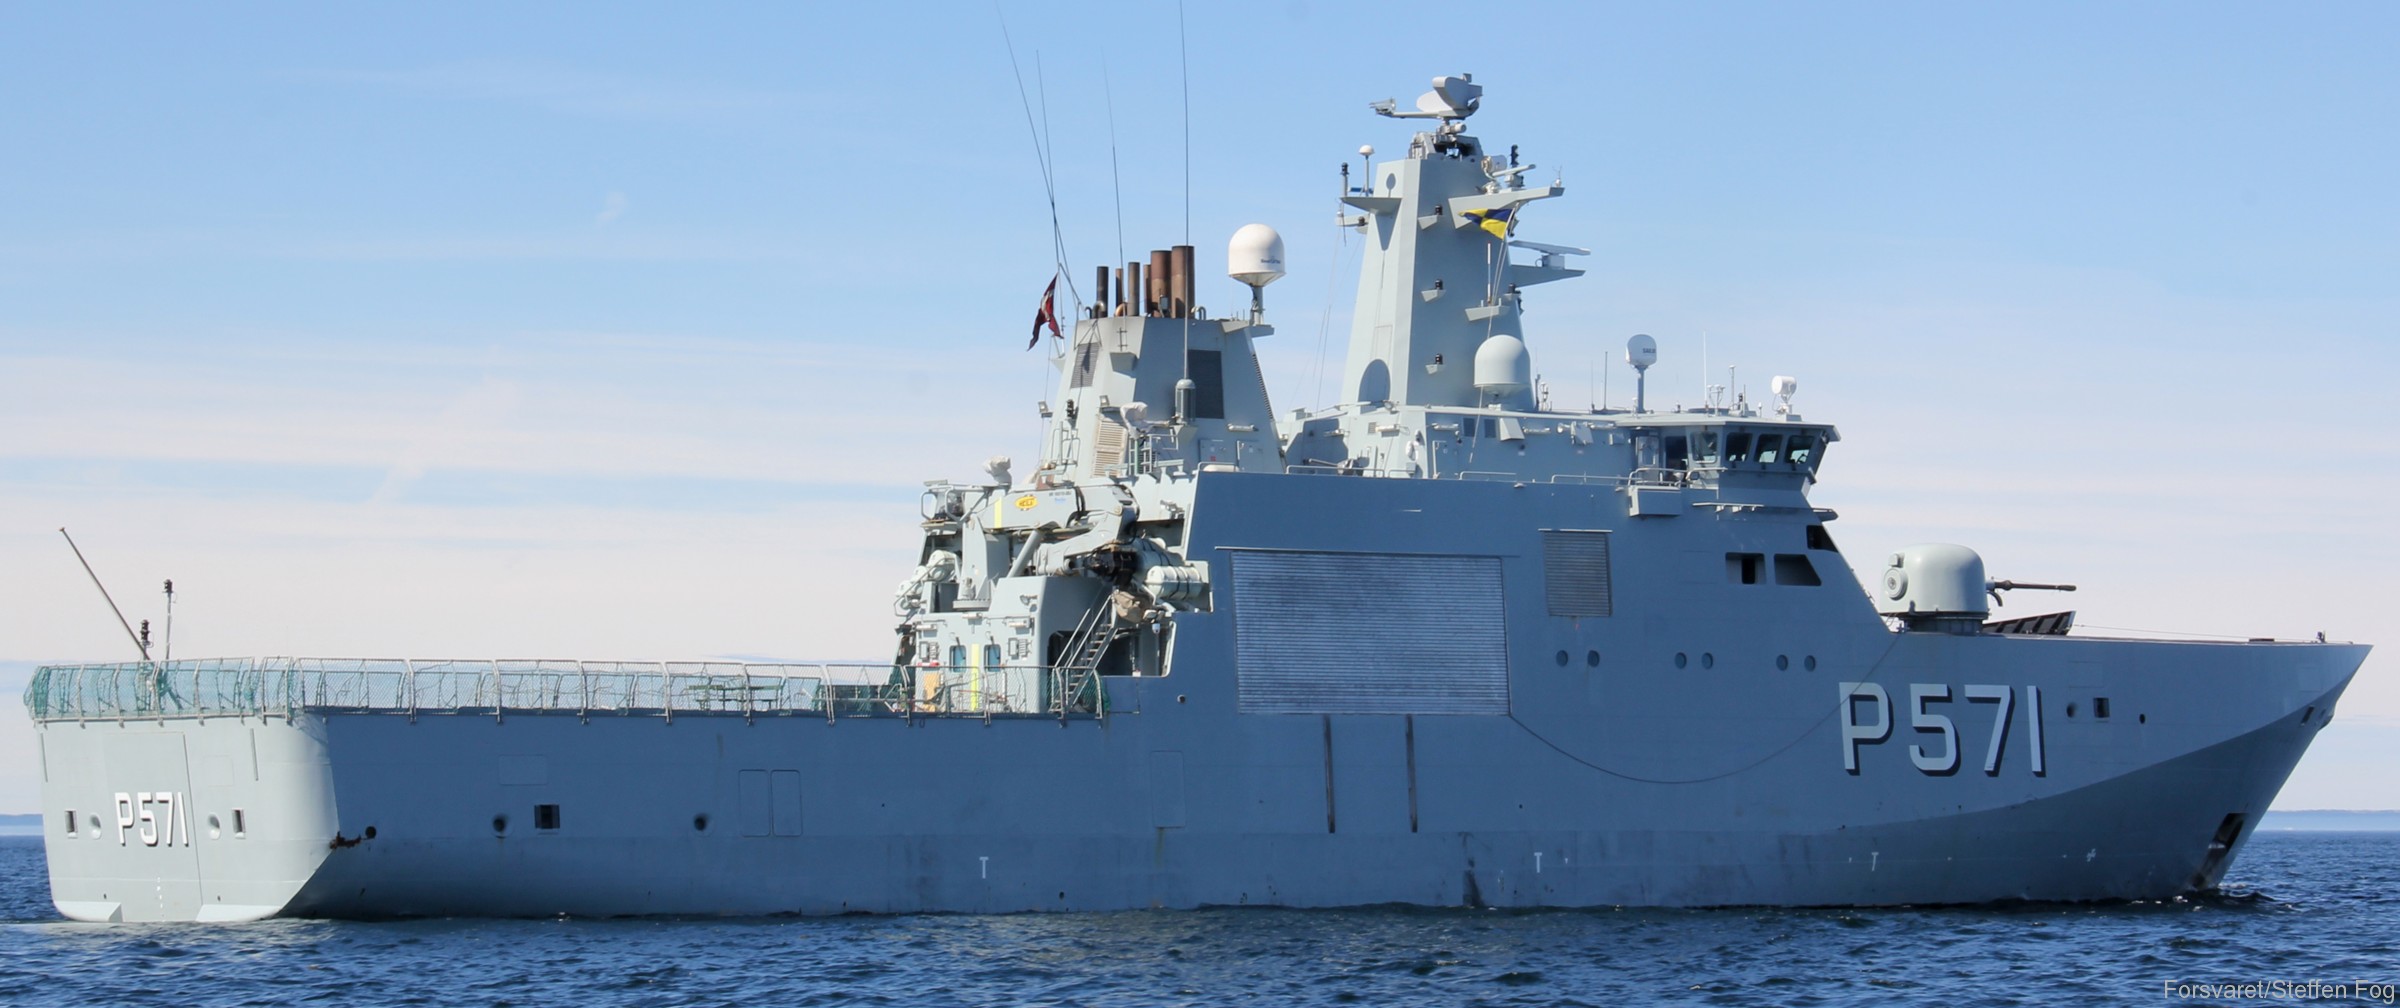 p-571 hdms ejnar mikkelsen knud rasmussen class offshore patrol vessel opv royal danish navy inspektionsfartøj 10